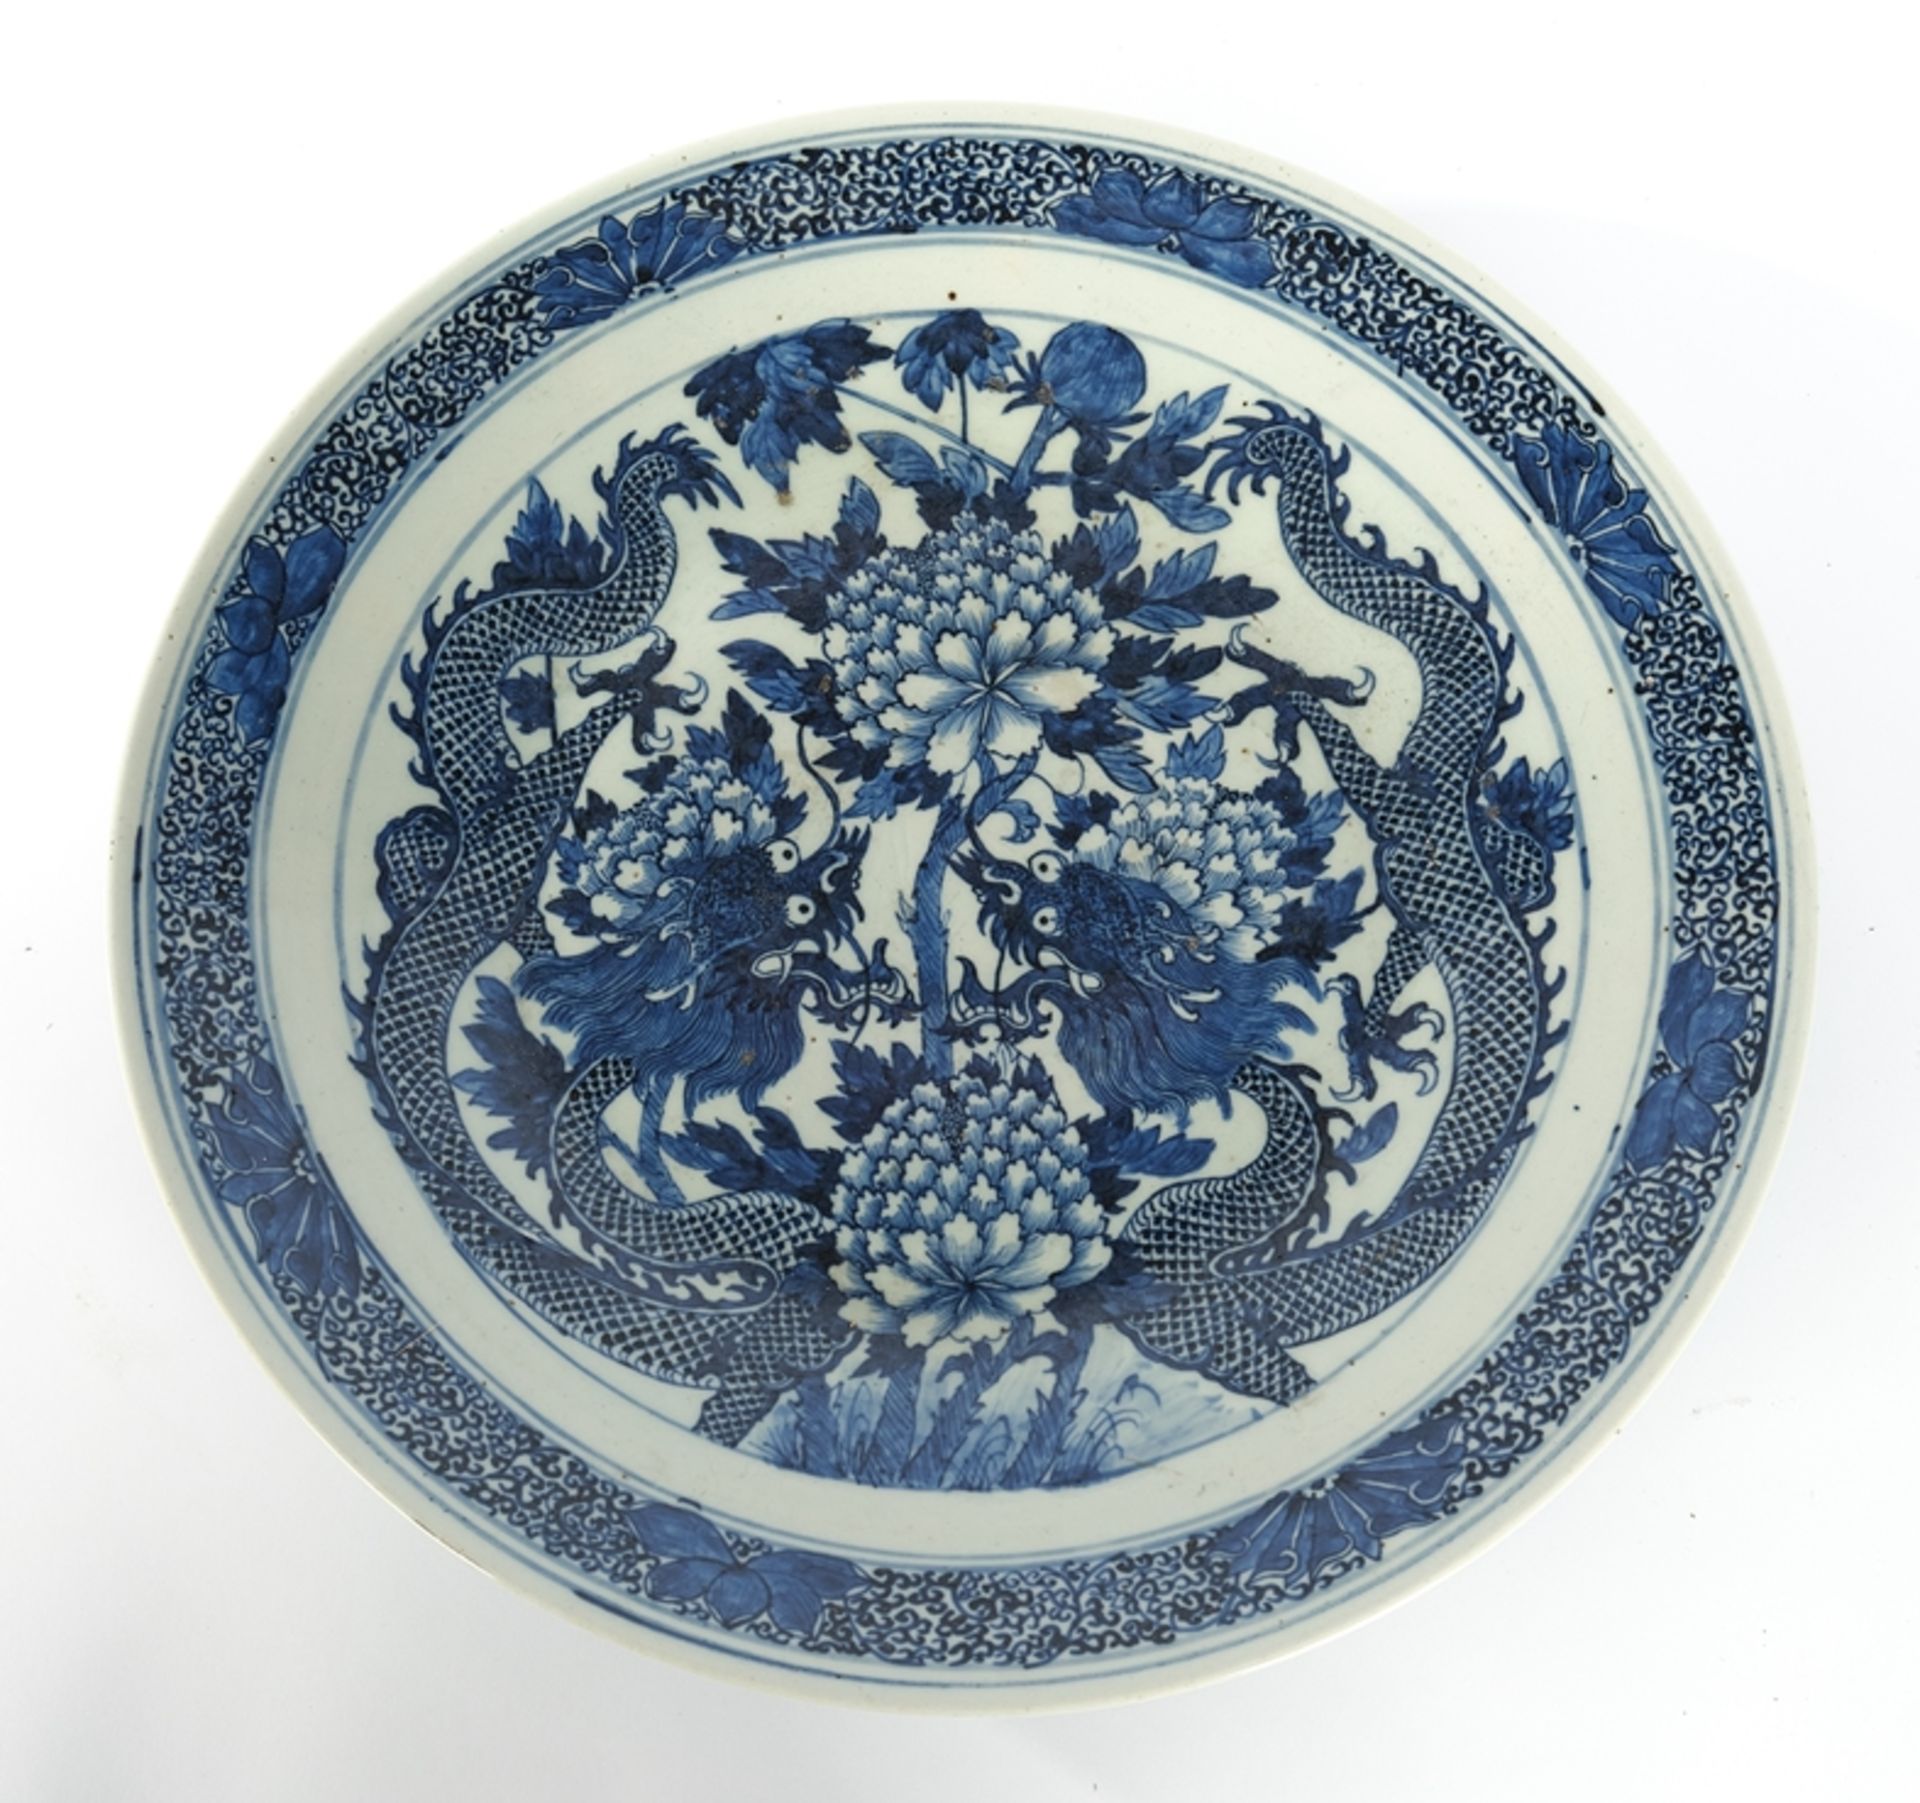 Platte, China, 19./20. Jh., Porzellan, blau-weißer Drachendekor, ø 46.5 cm